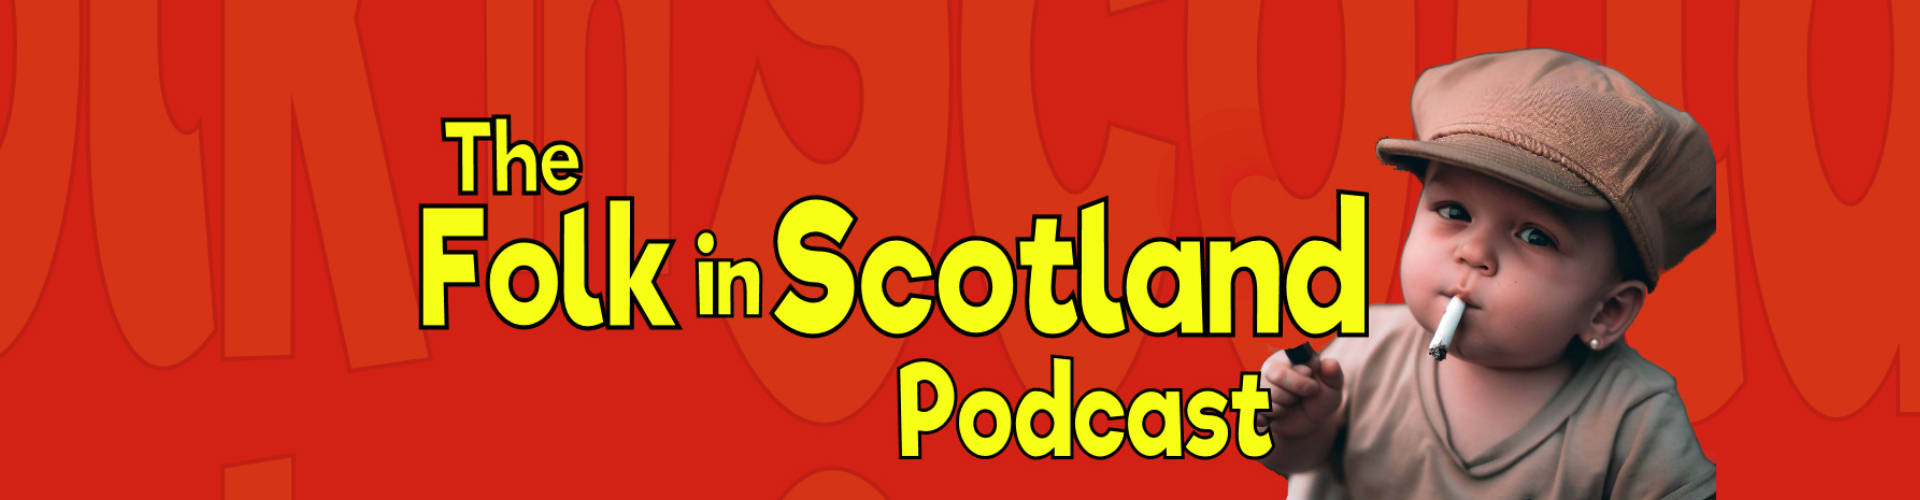 The Folk in Scotland’s Podcast